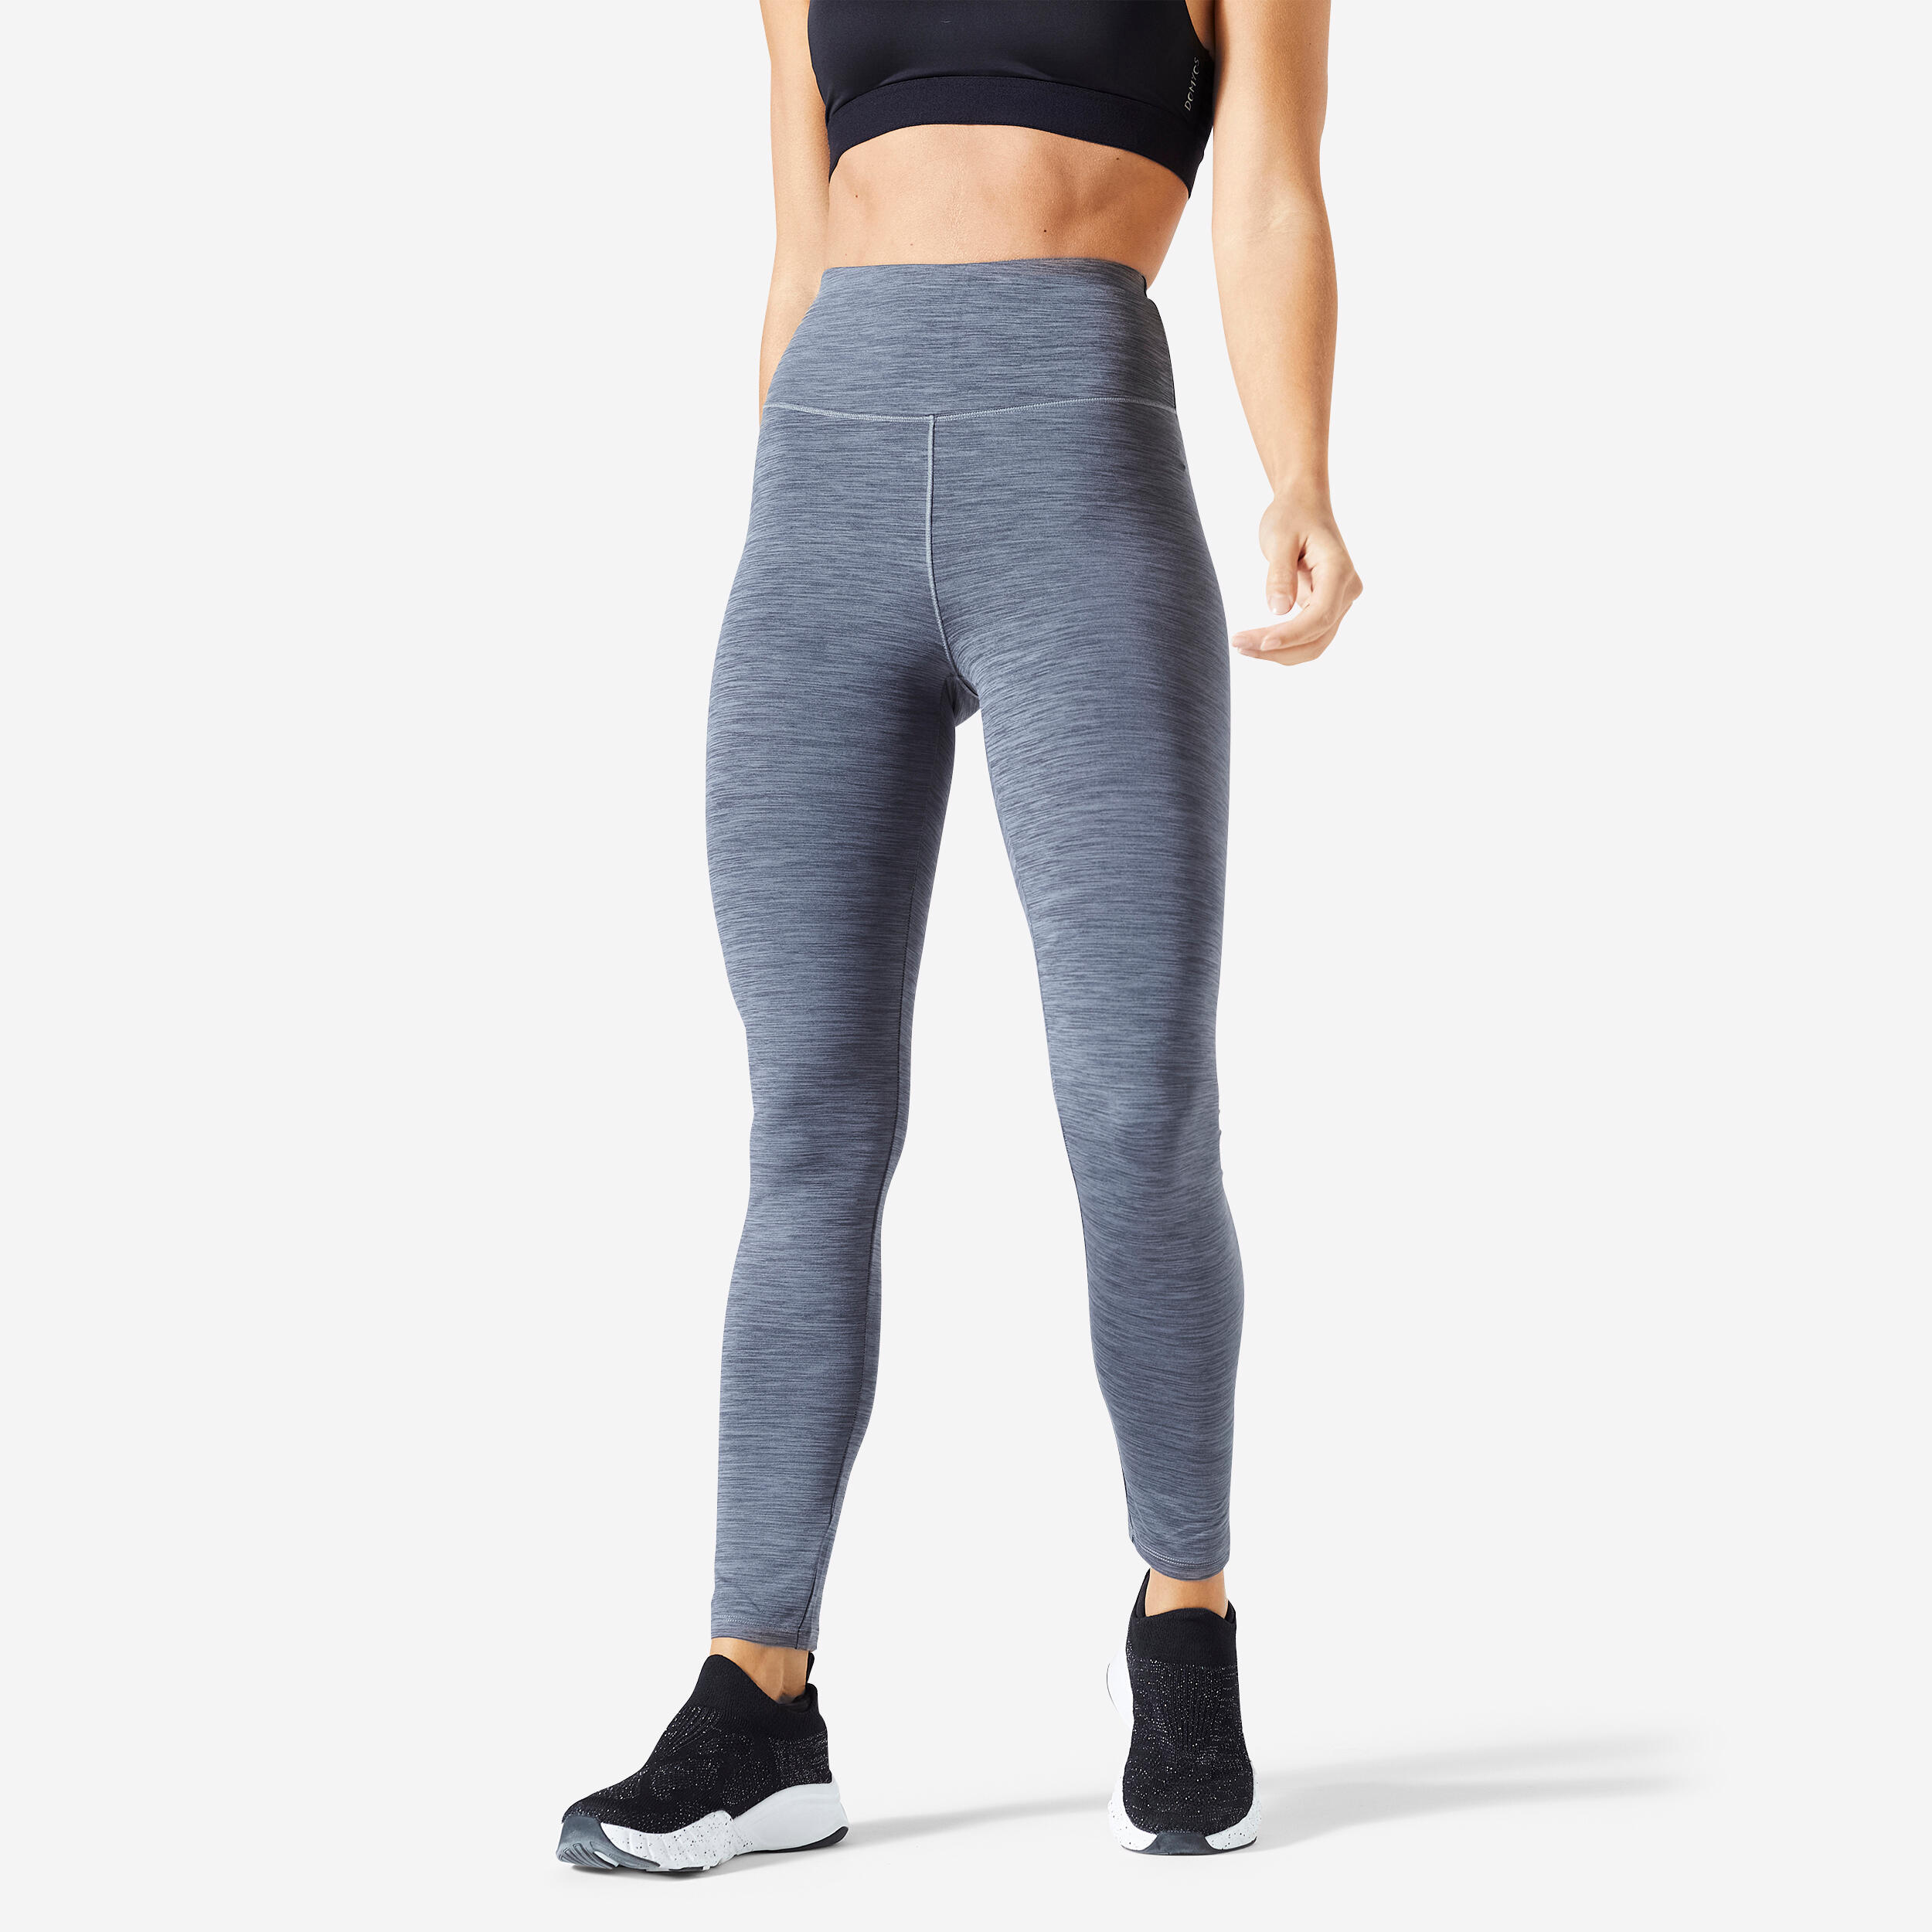 Shop Go Women's Firm-Support Mid-Rise Full-Length Leggings with Pockets |  Nike KSA